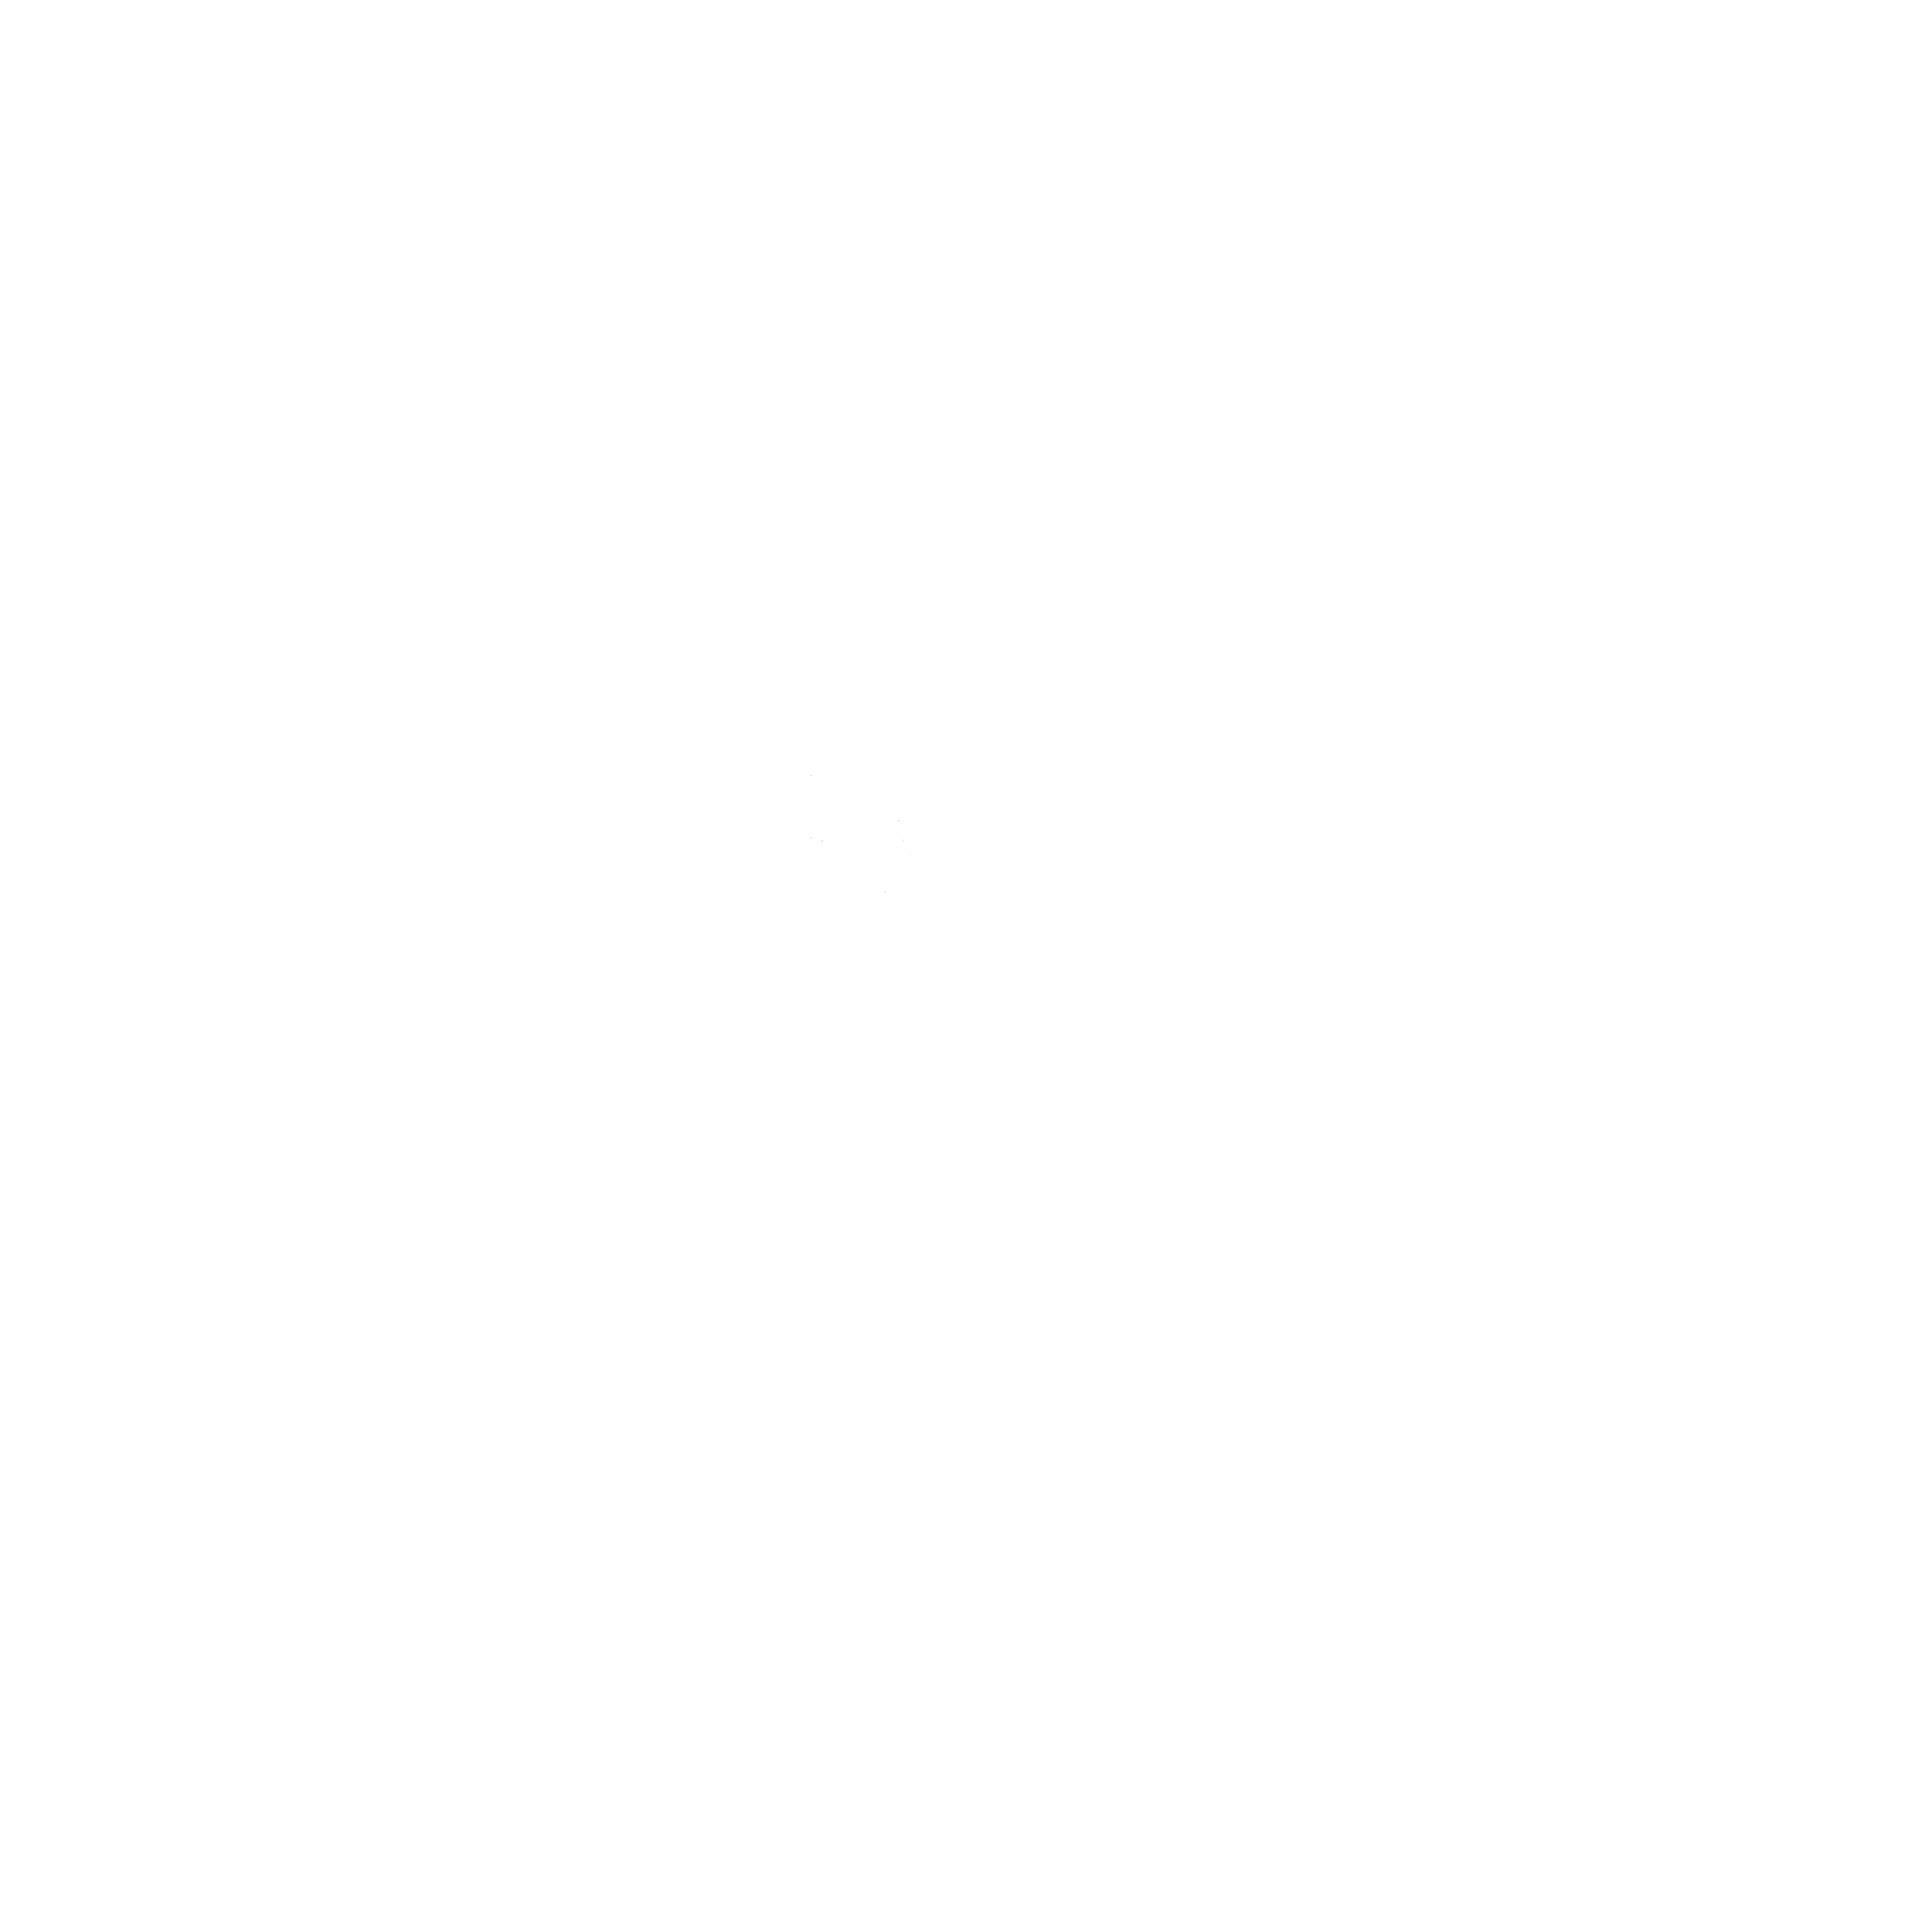 offroadstravel